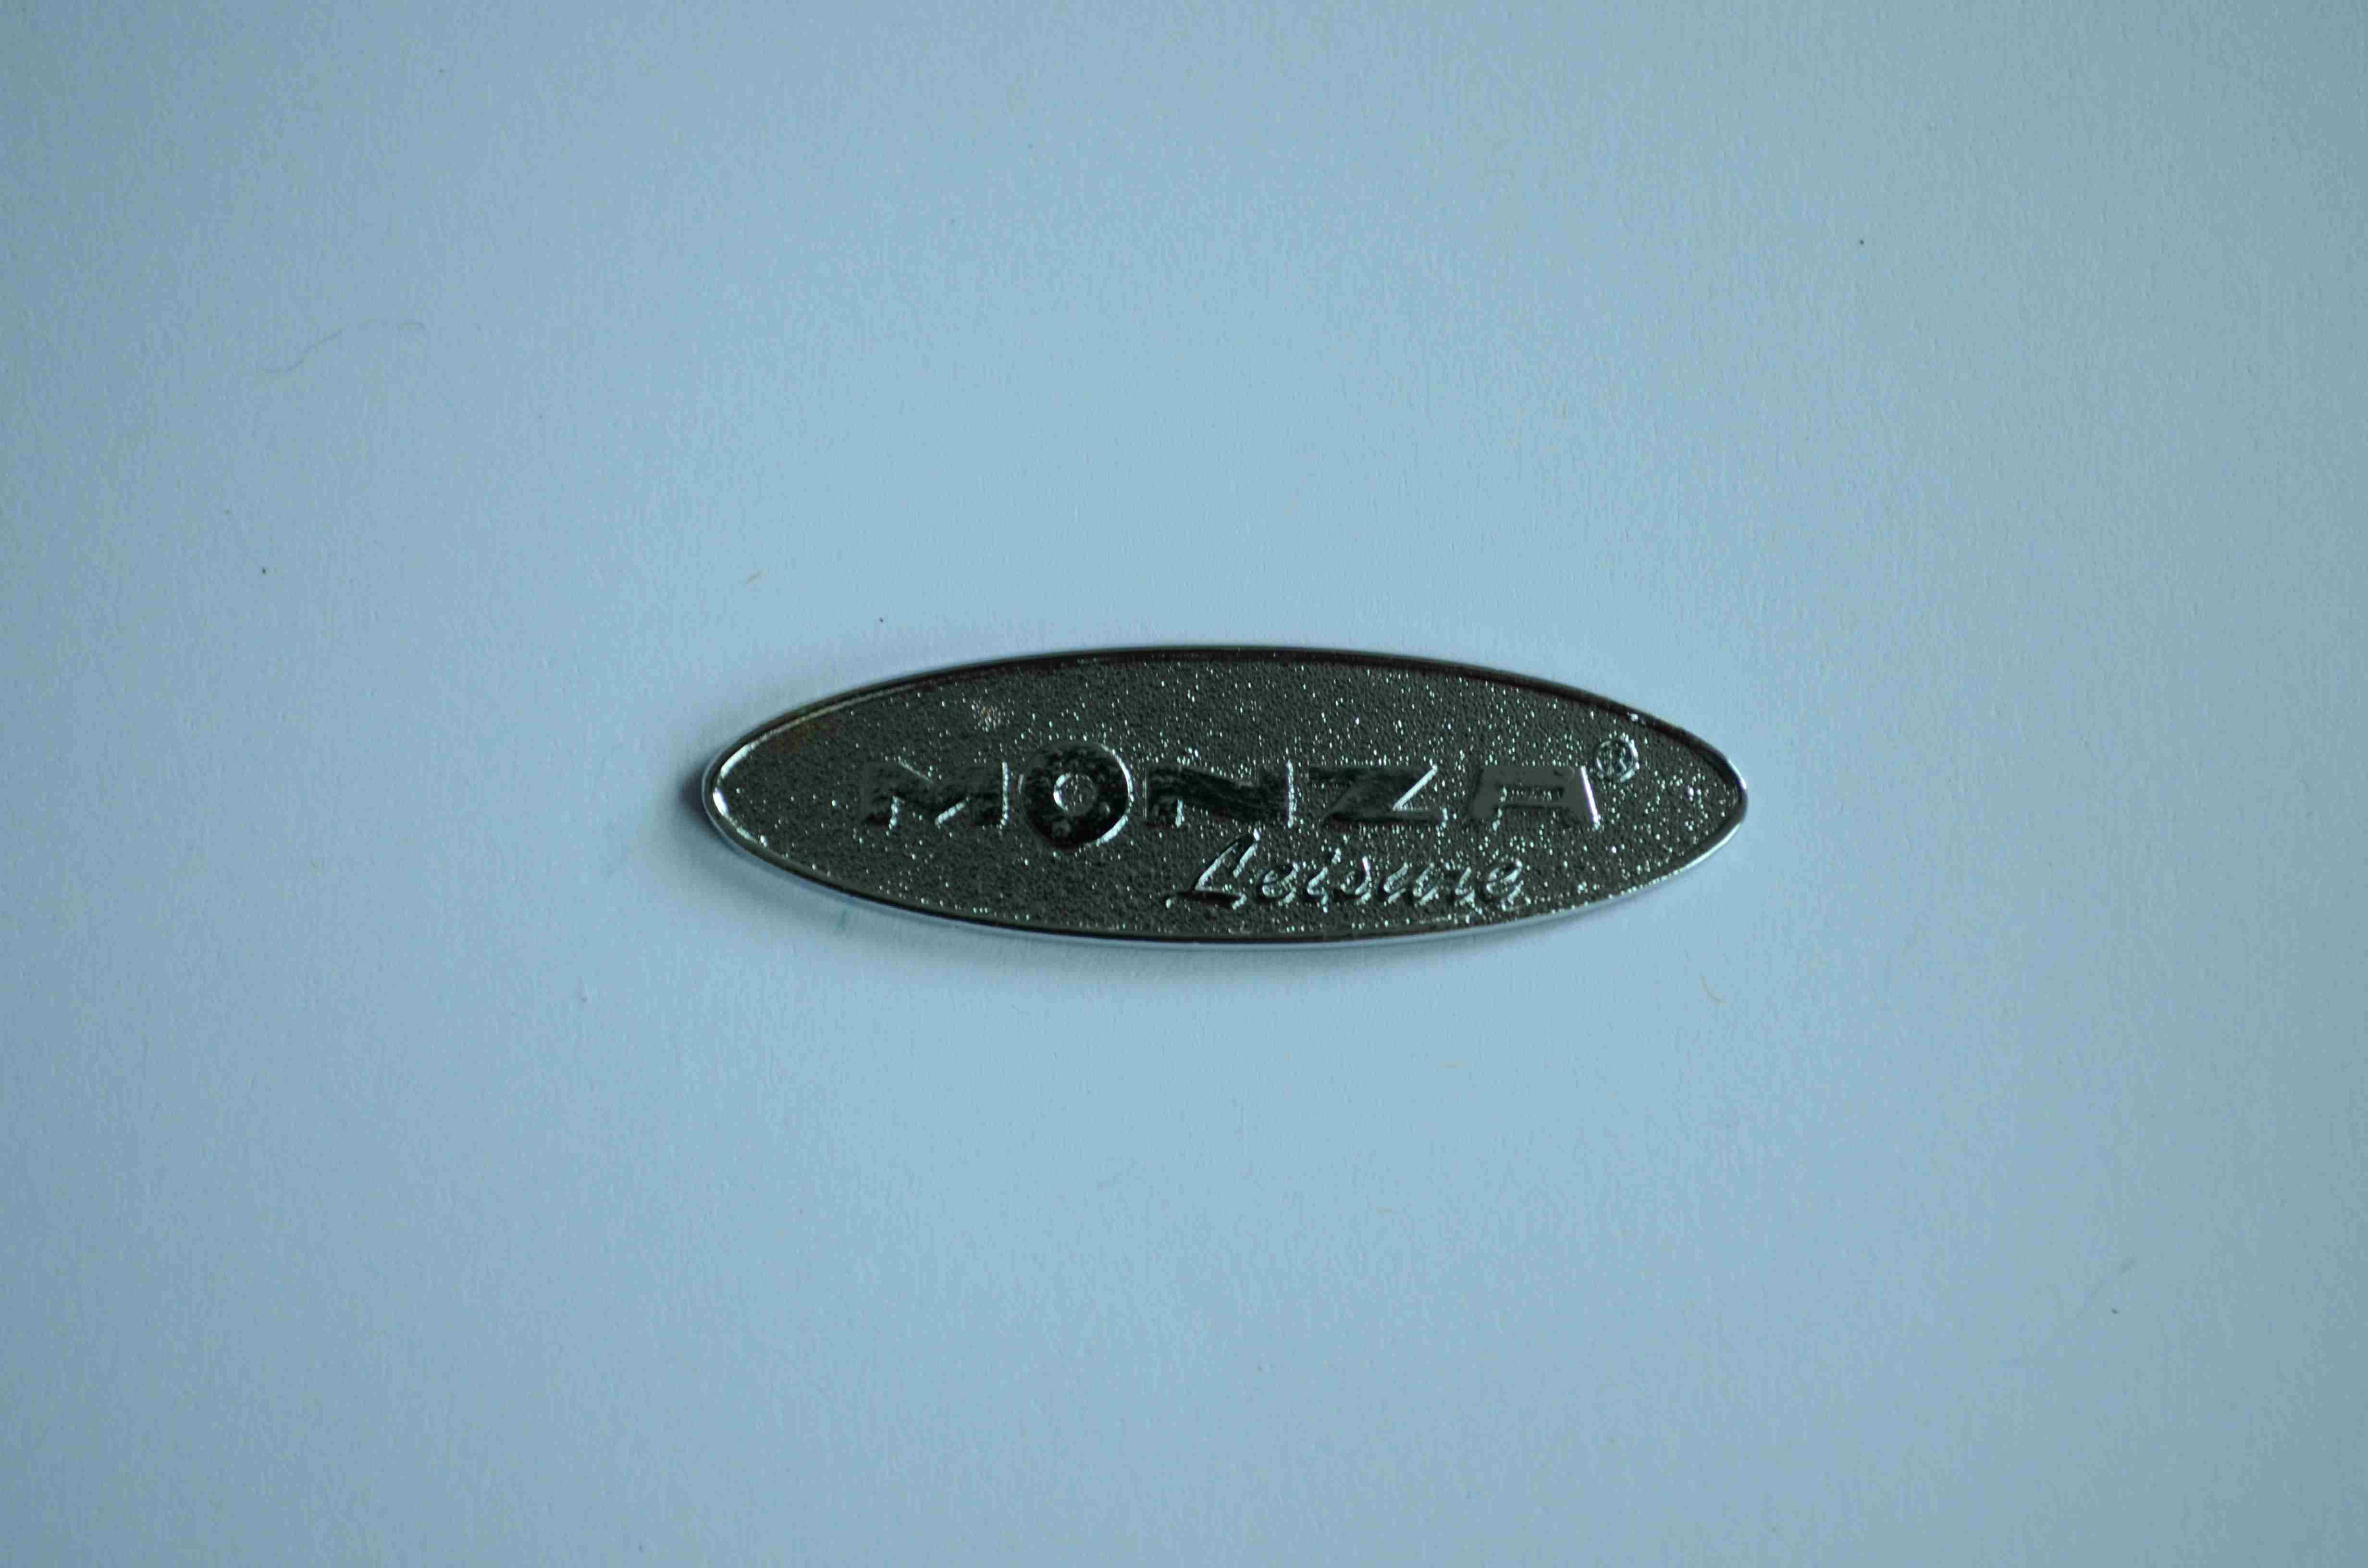 The Metal Label of Monza